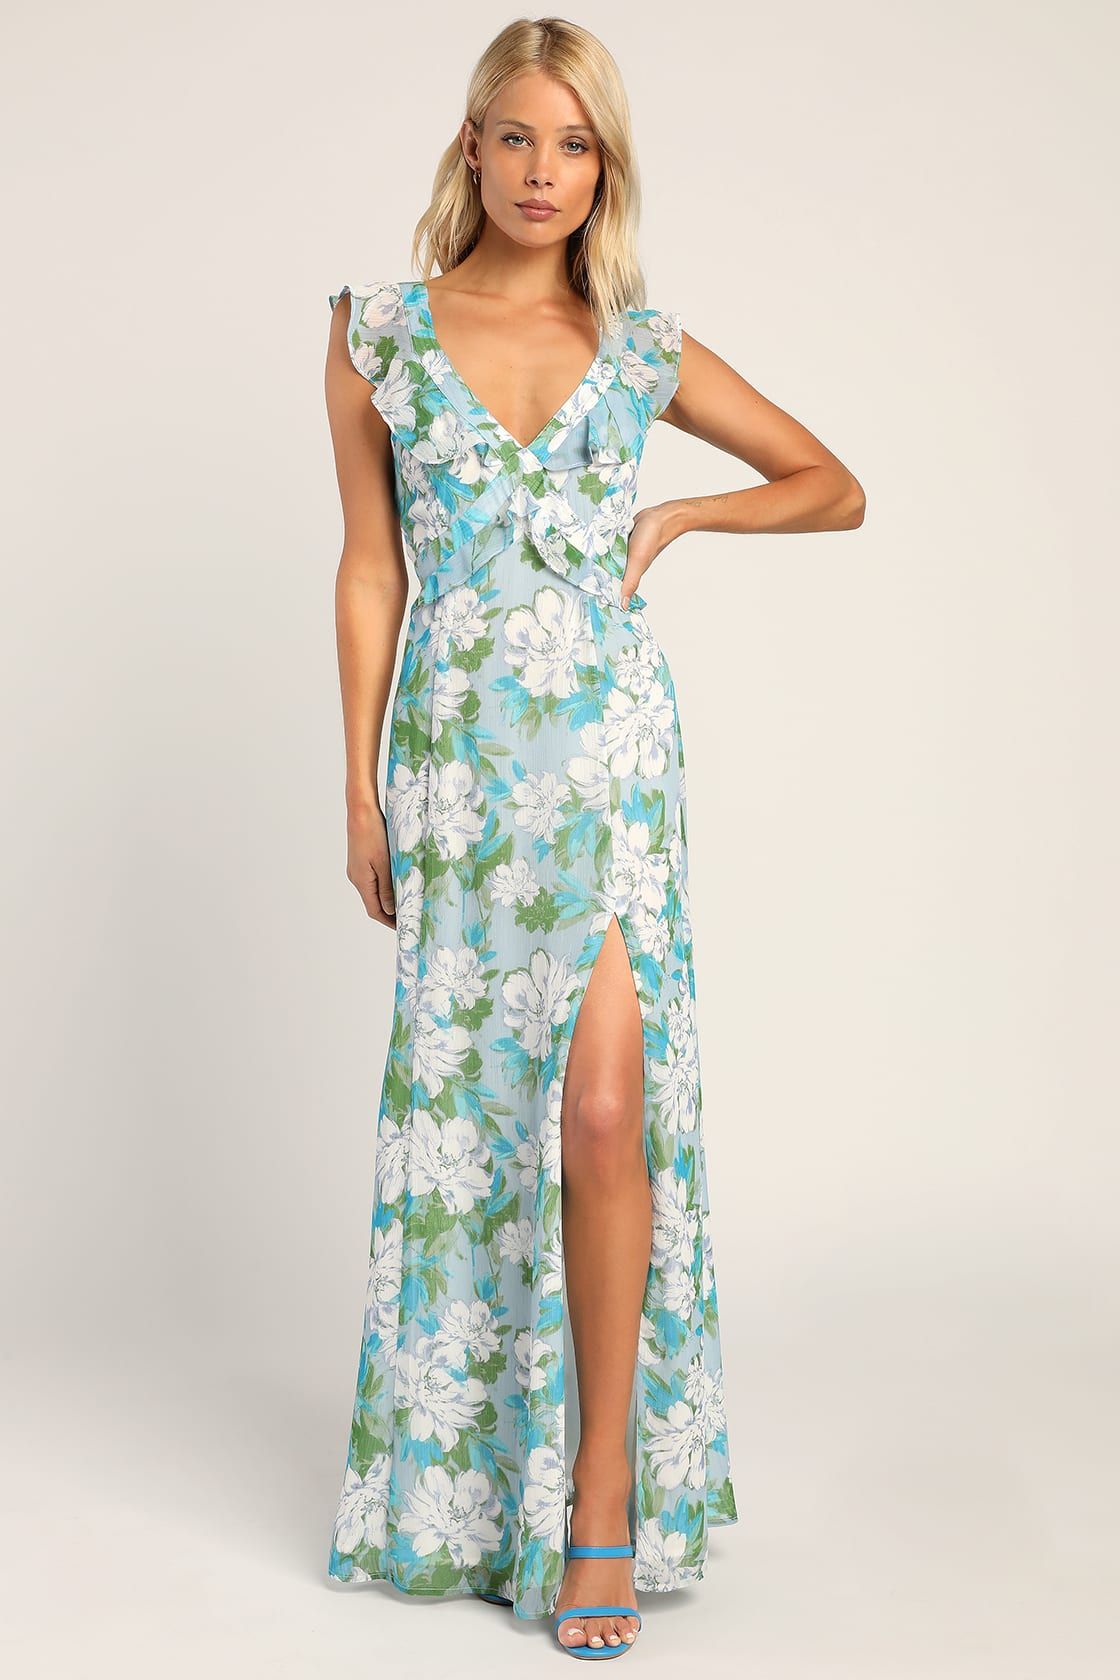 Sensational Spring Light Blue Floral Print Ruffled Maxi Dress | Lulus (US)